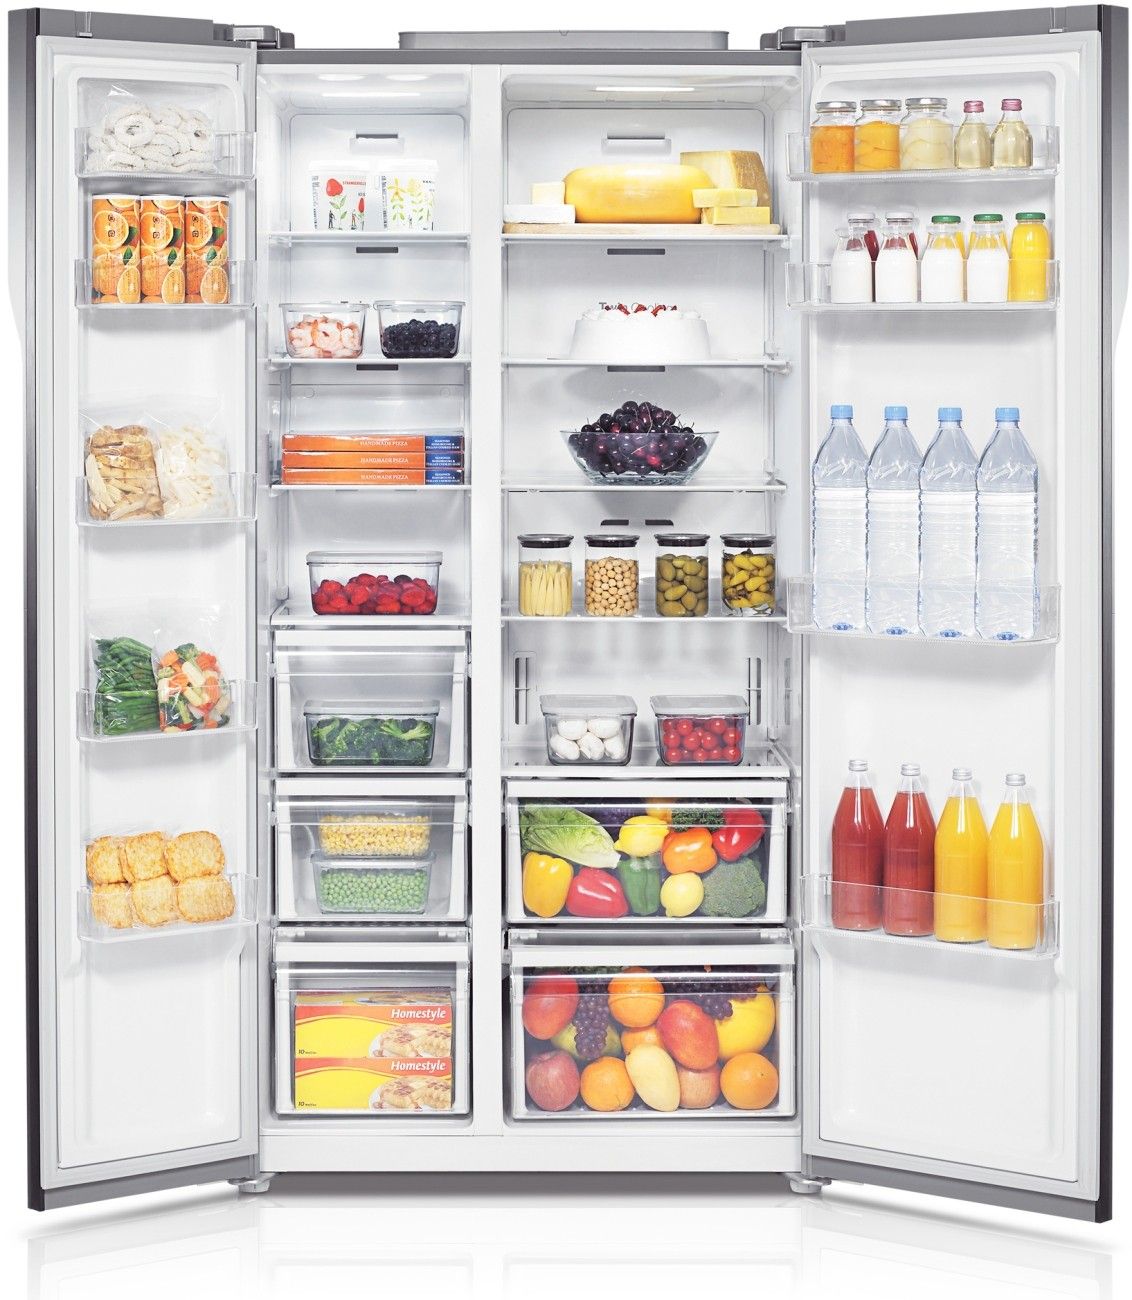 The best Samsung refrigerators in 2022